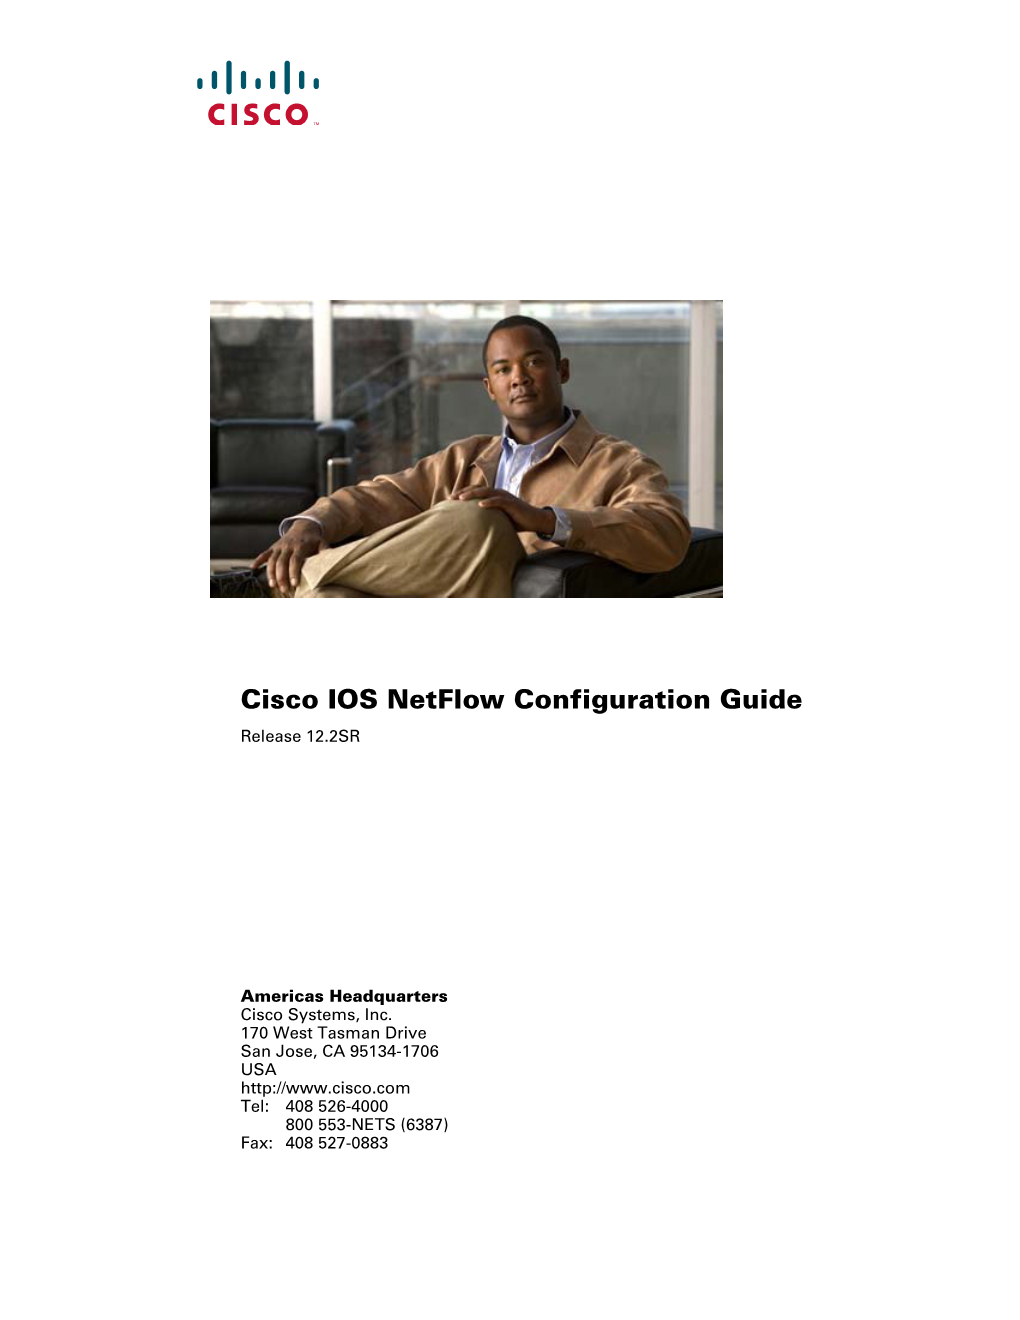 Cisco IOS Netflow Configuration Guide, Release 12.2SR